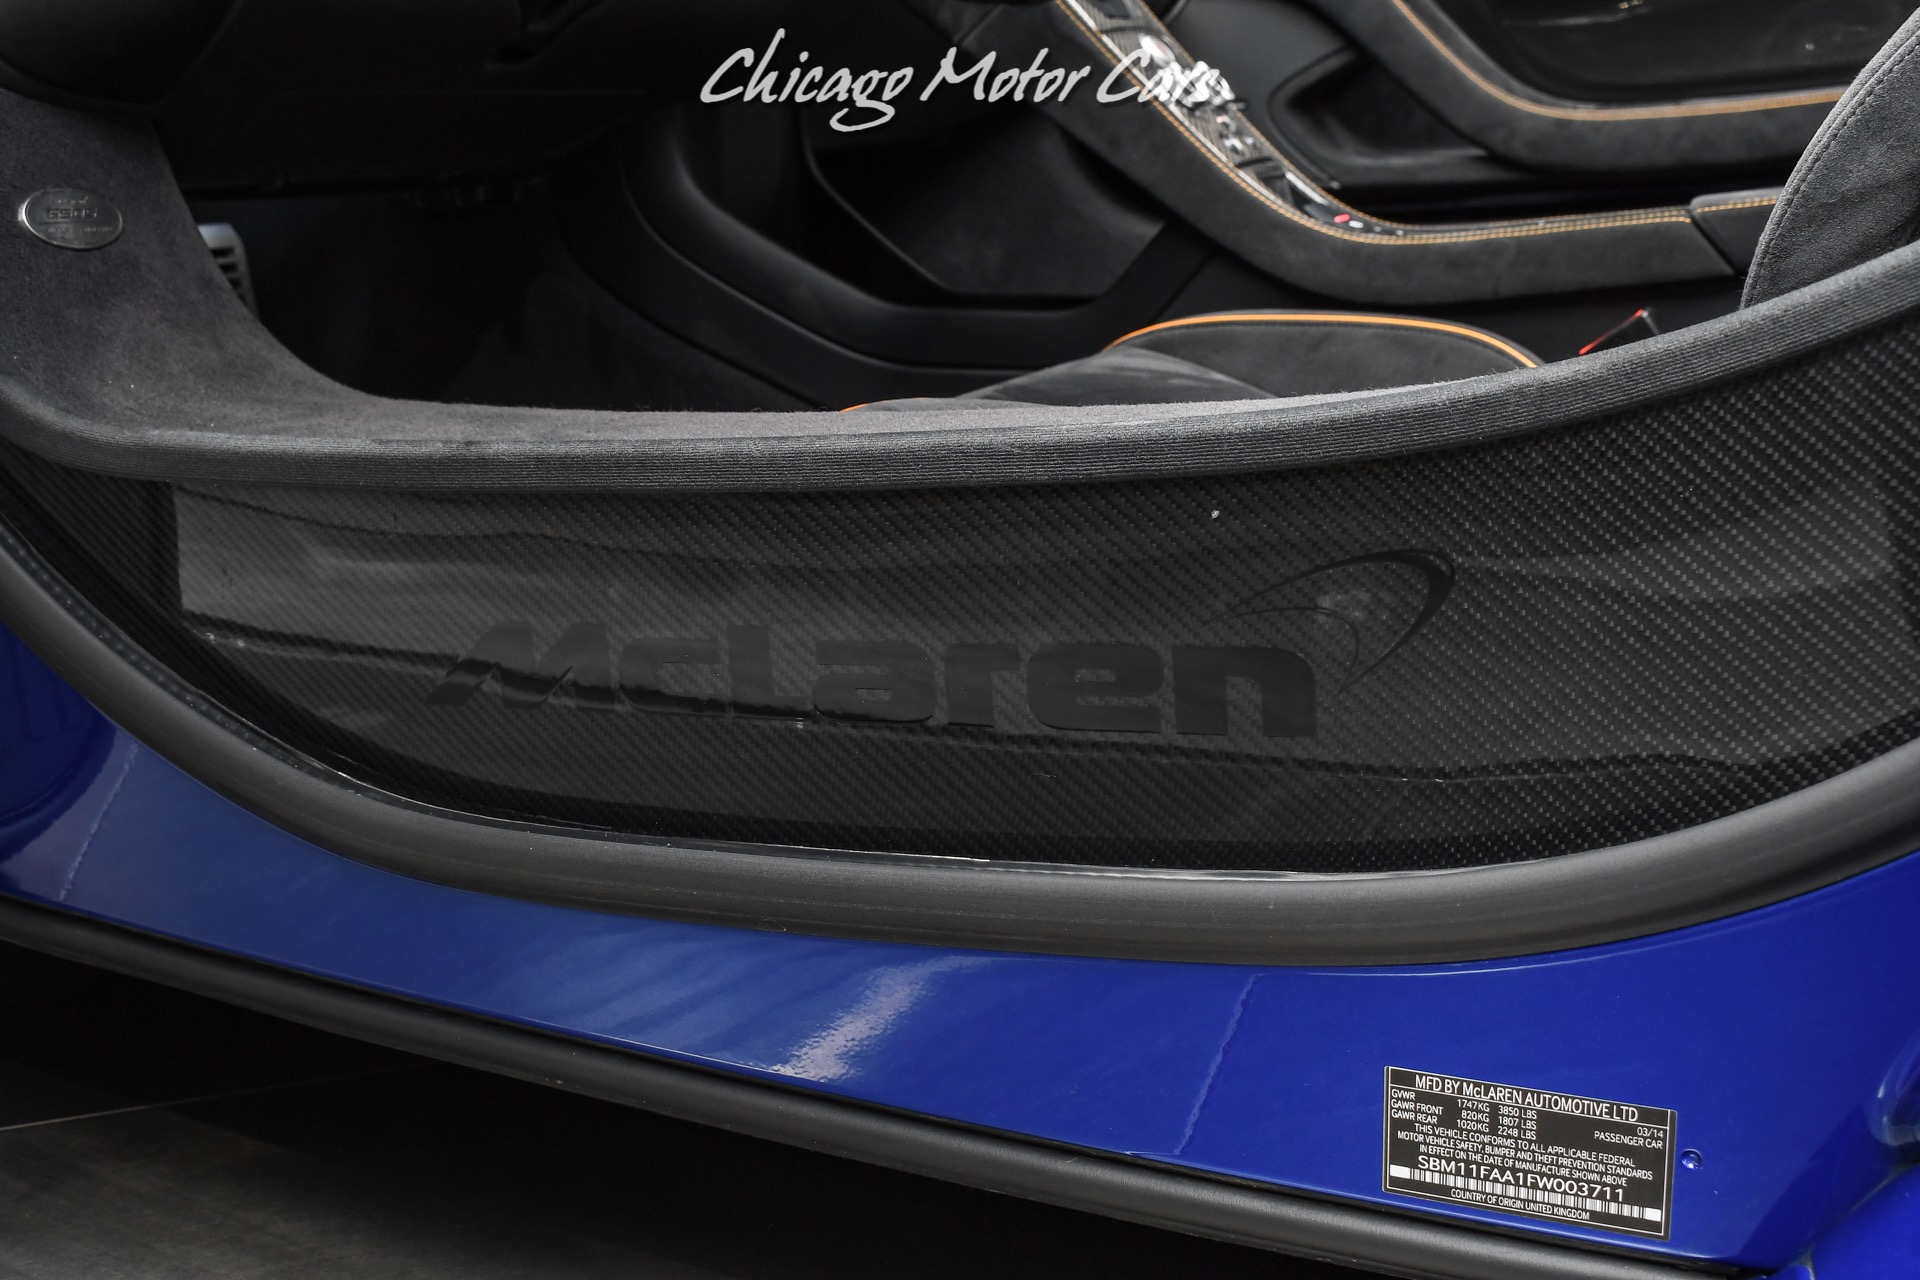 Used-2015-McLaren-650S-Spider-TASTEFULLY-MODDED-SERVICED-RECORDS-FAST-800RWHP-346K-MSRP